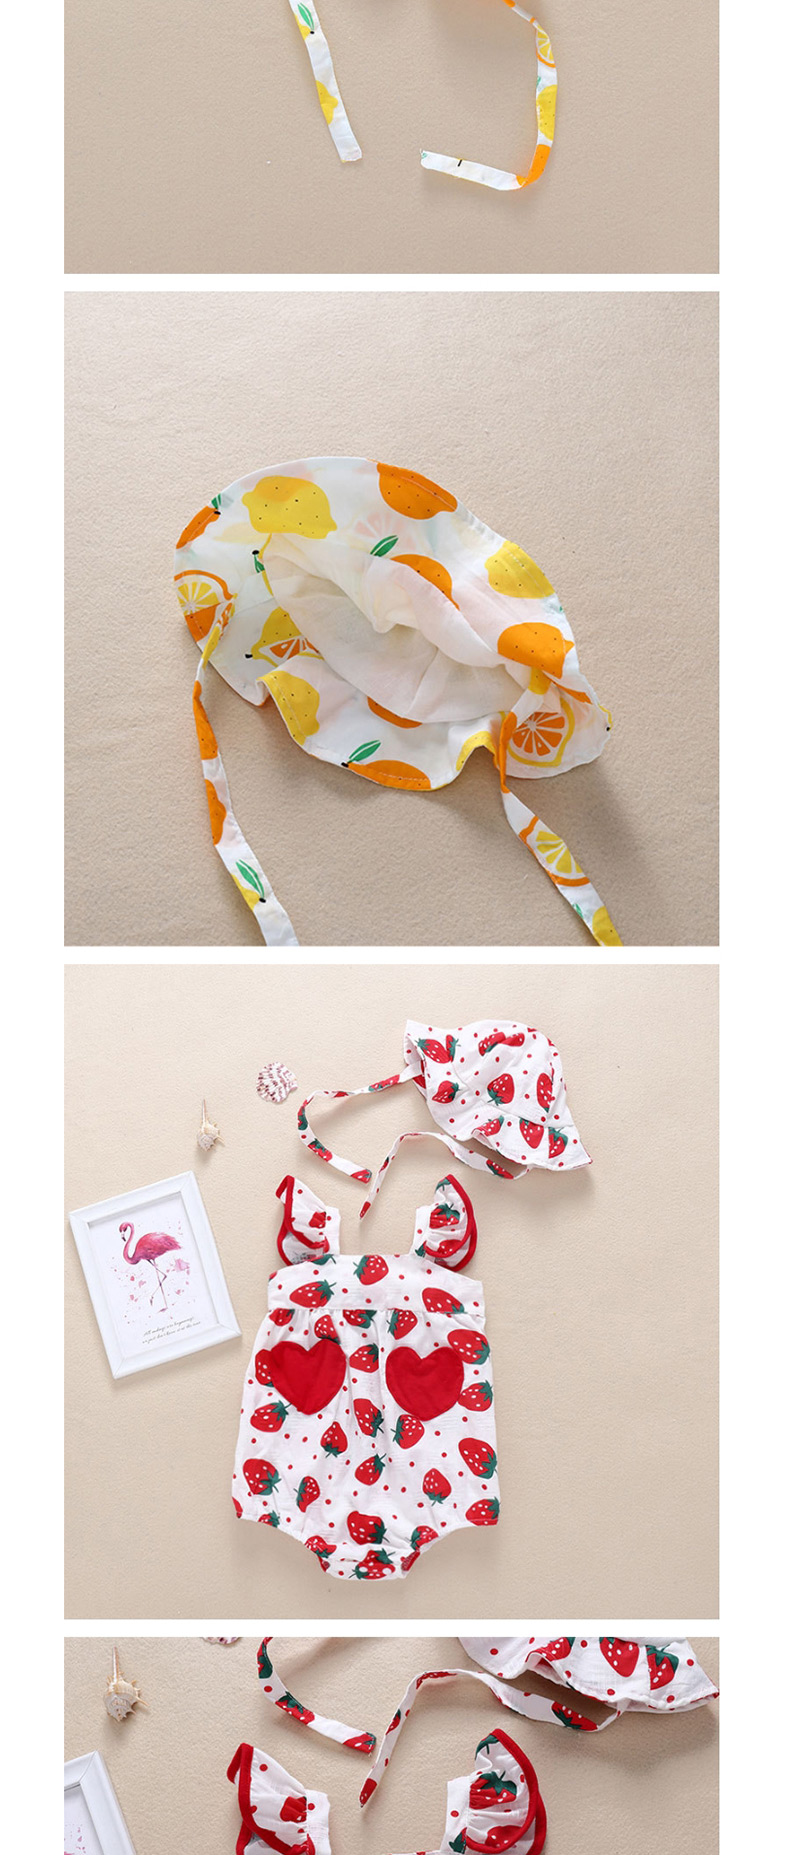 Fashion Lemon Yellow Fruit Print Love Patch Pocket Baby Triangle Lace,Kids Clothing